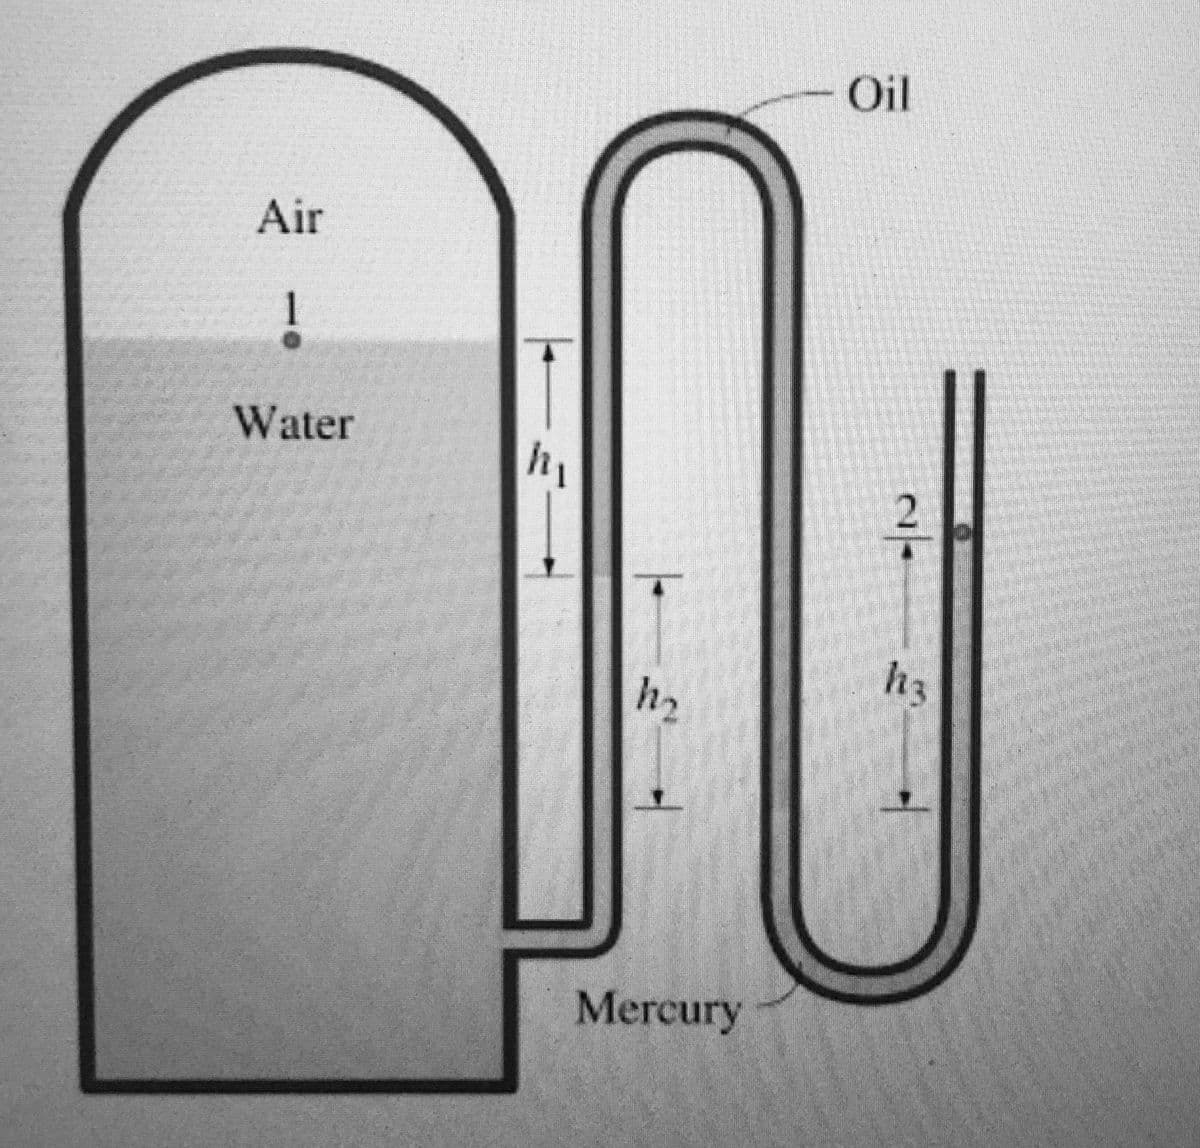 Oil
Air
Water
2
h3
h2
Mercury
